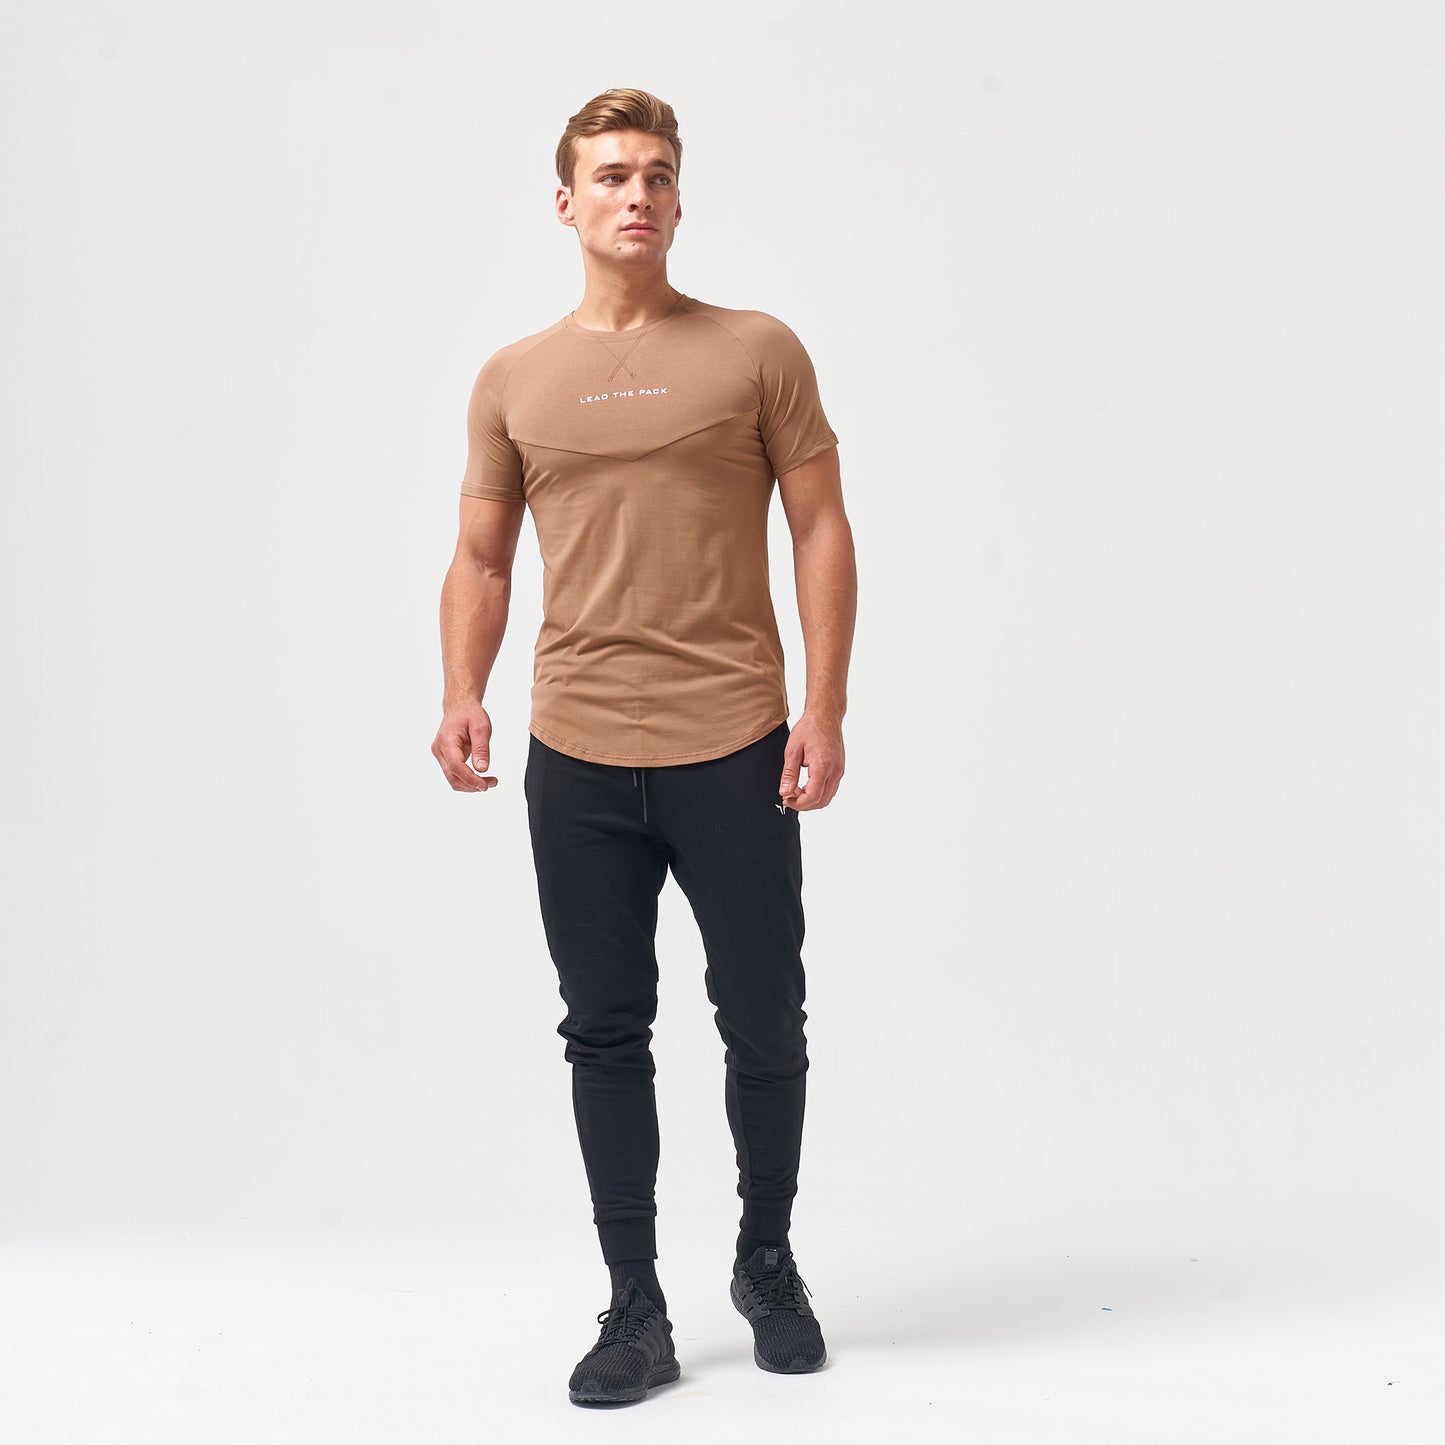 squatwolf-gym-wear-statement-tee-brown-workout-shirts-for-men